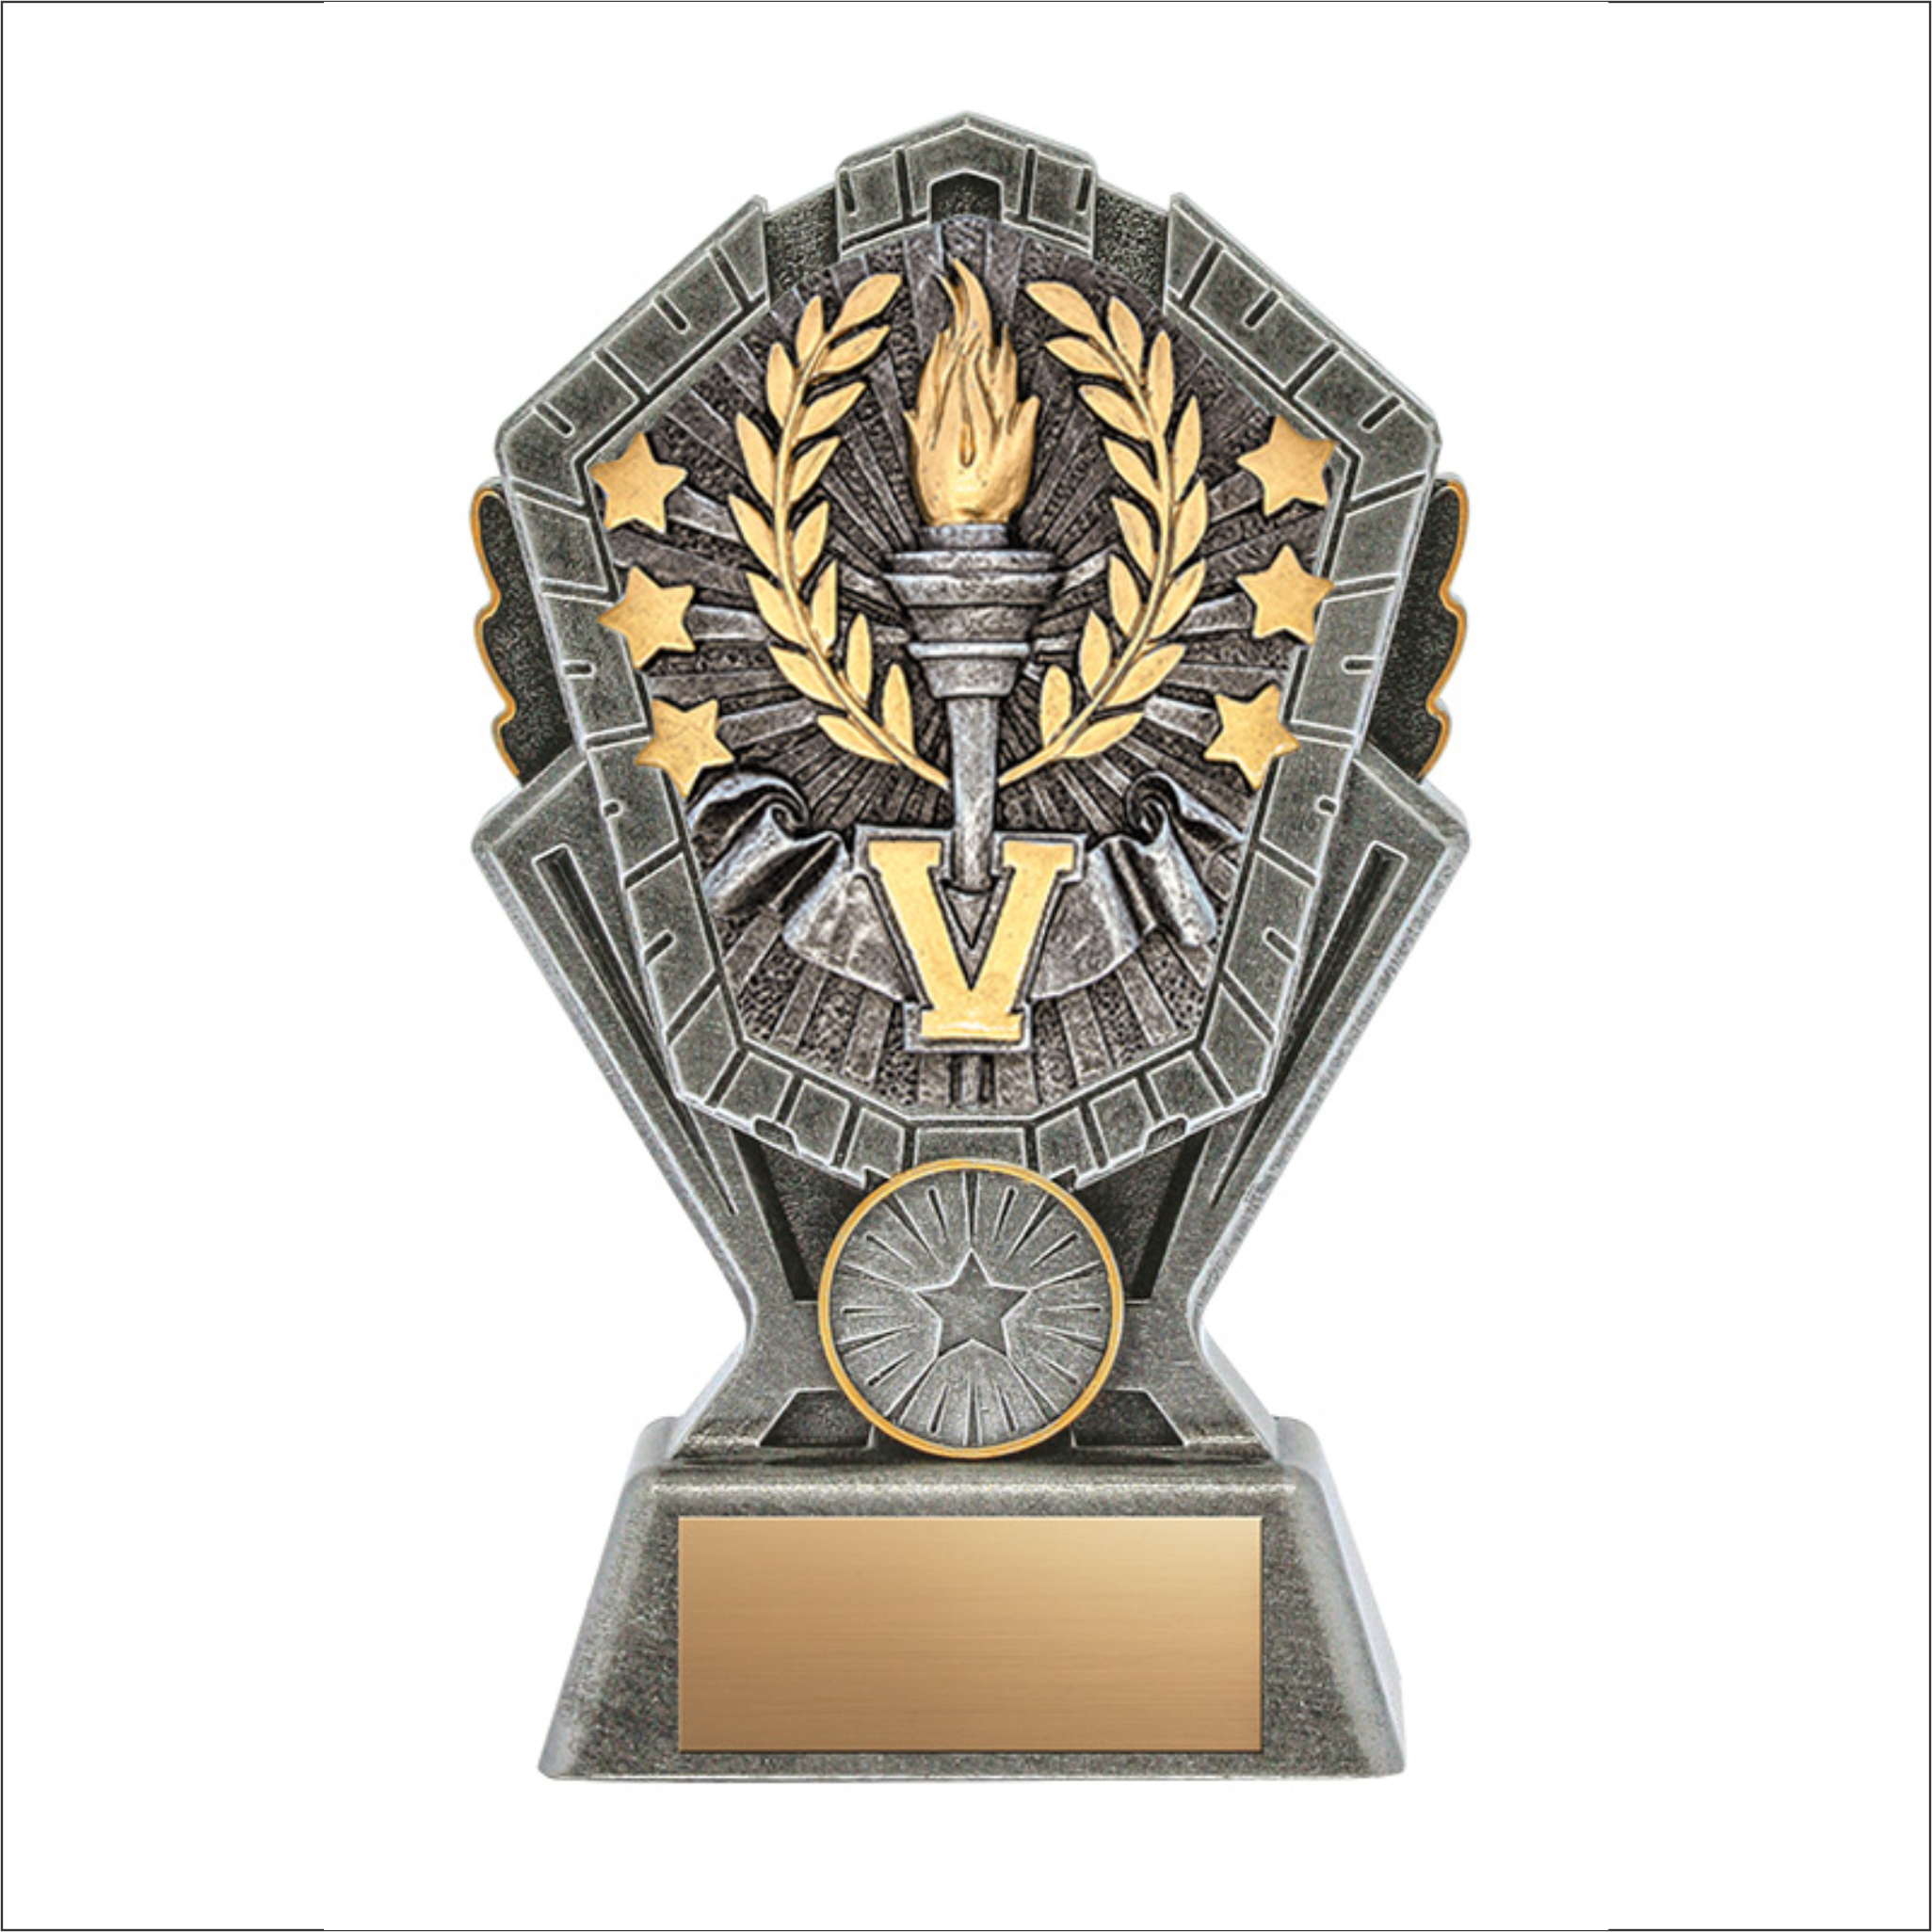 Victory trophy - Cosmos series